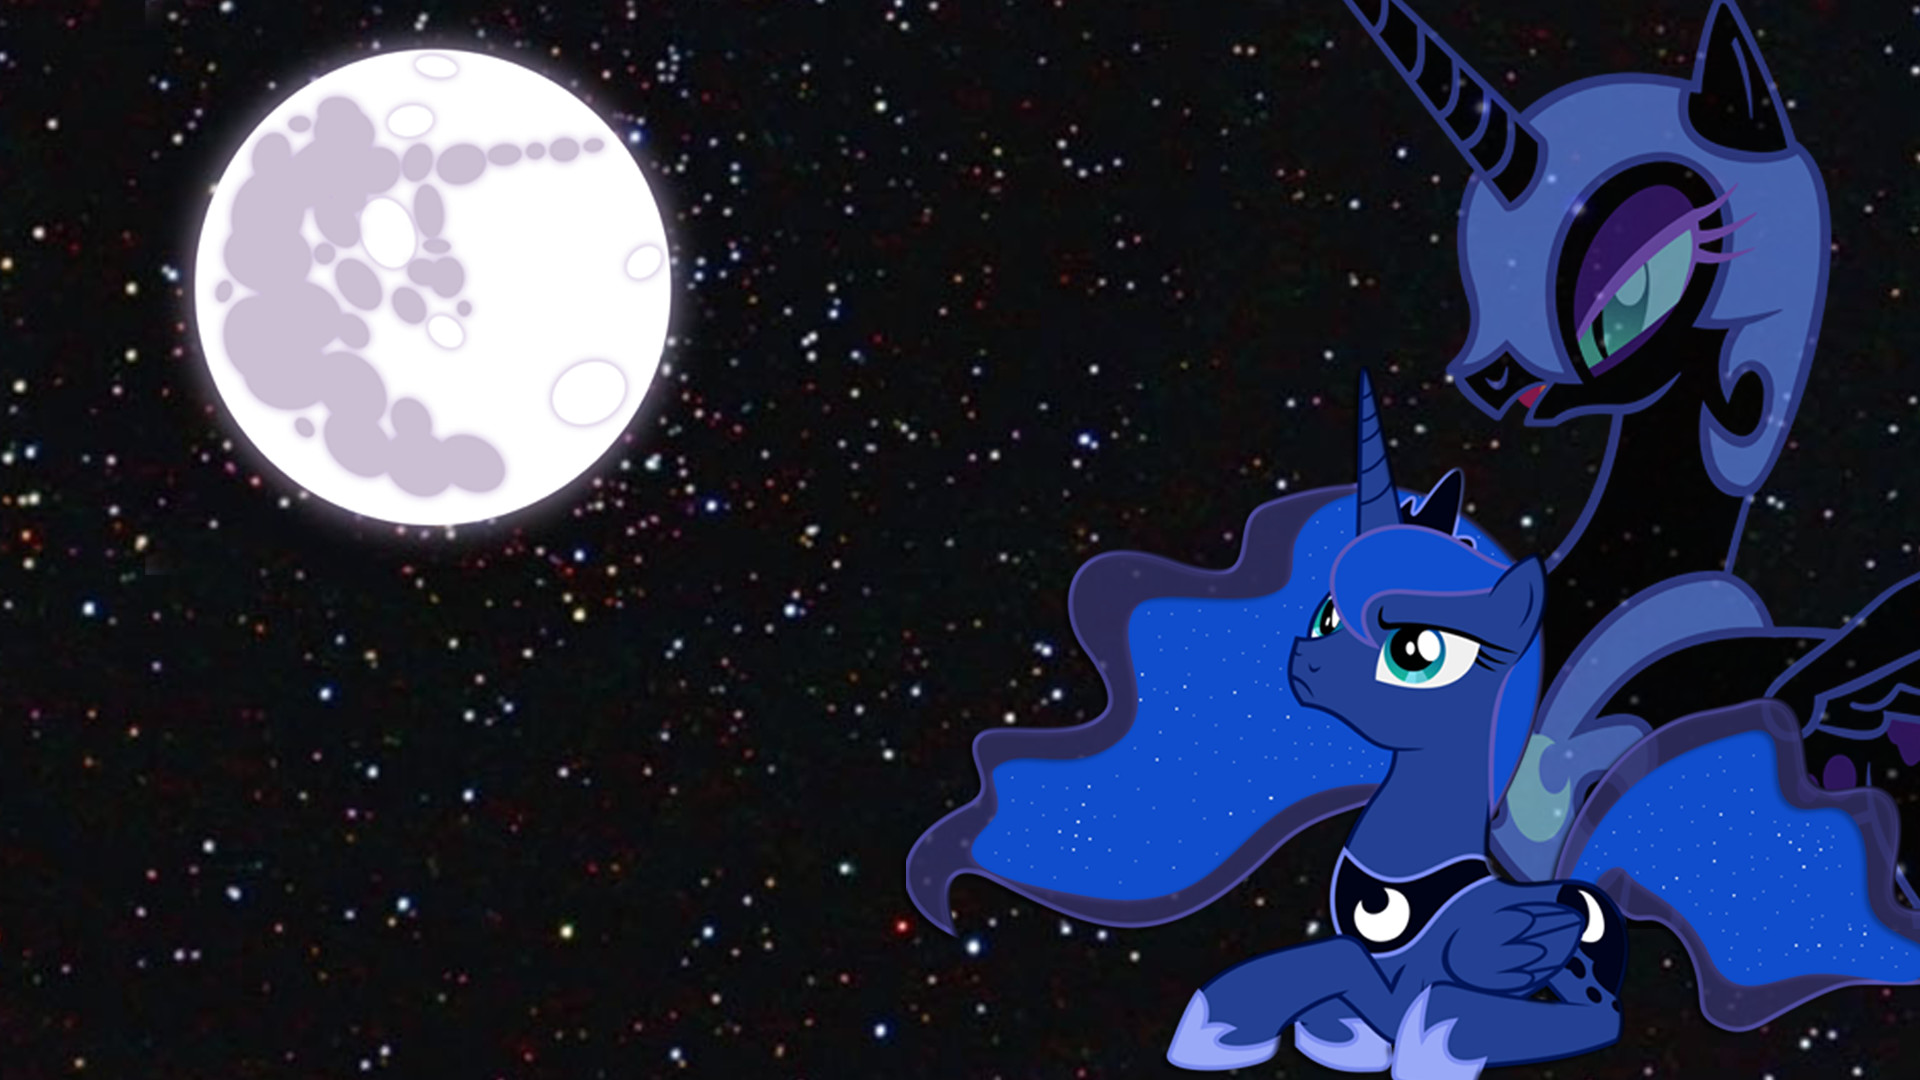 1920x1080 ... MLP:FiM Princess Luna and Nightmare moon wallpaper by Apoljak